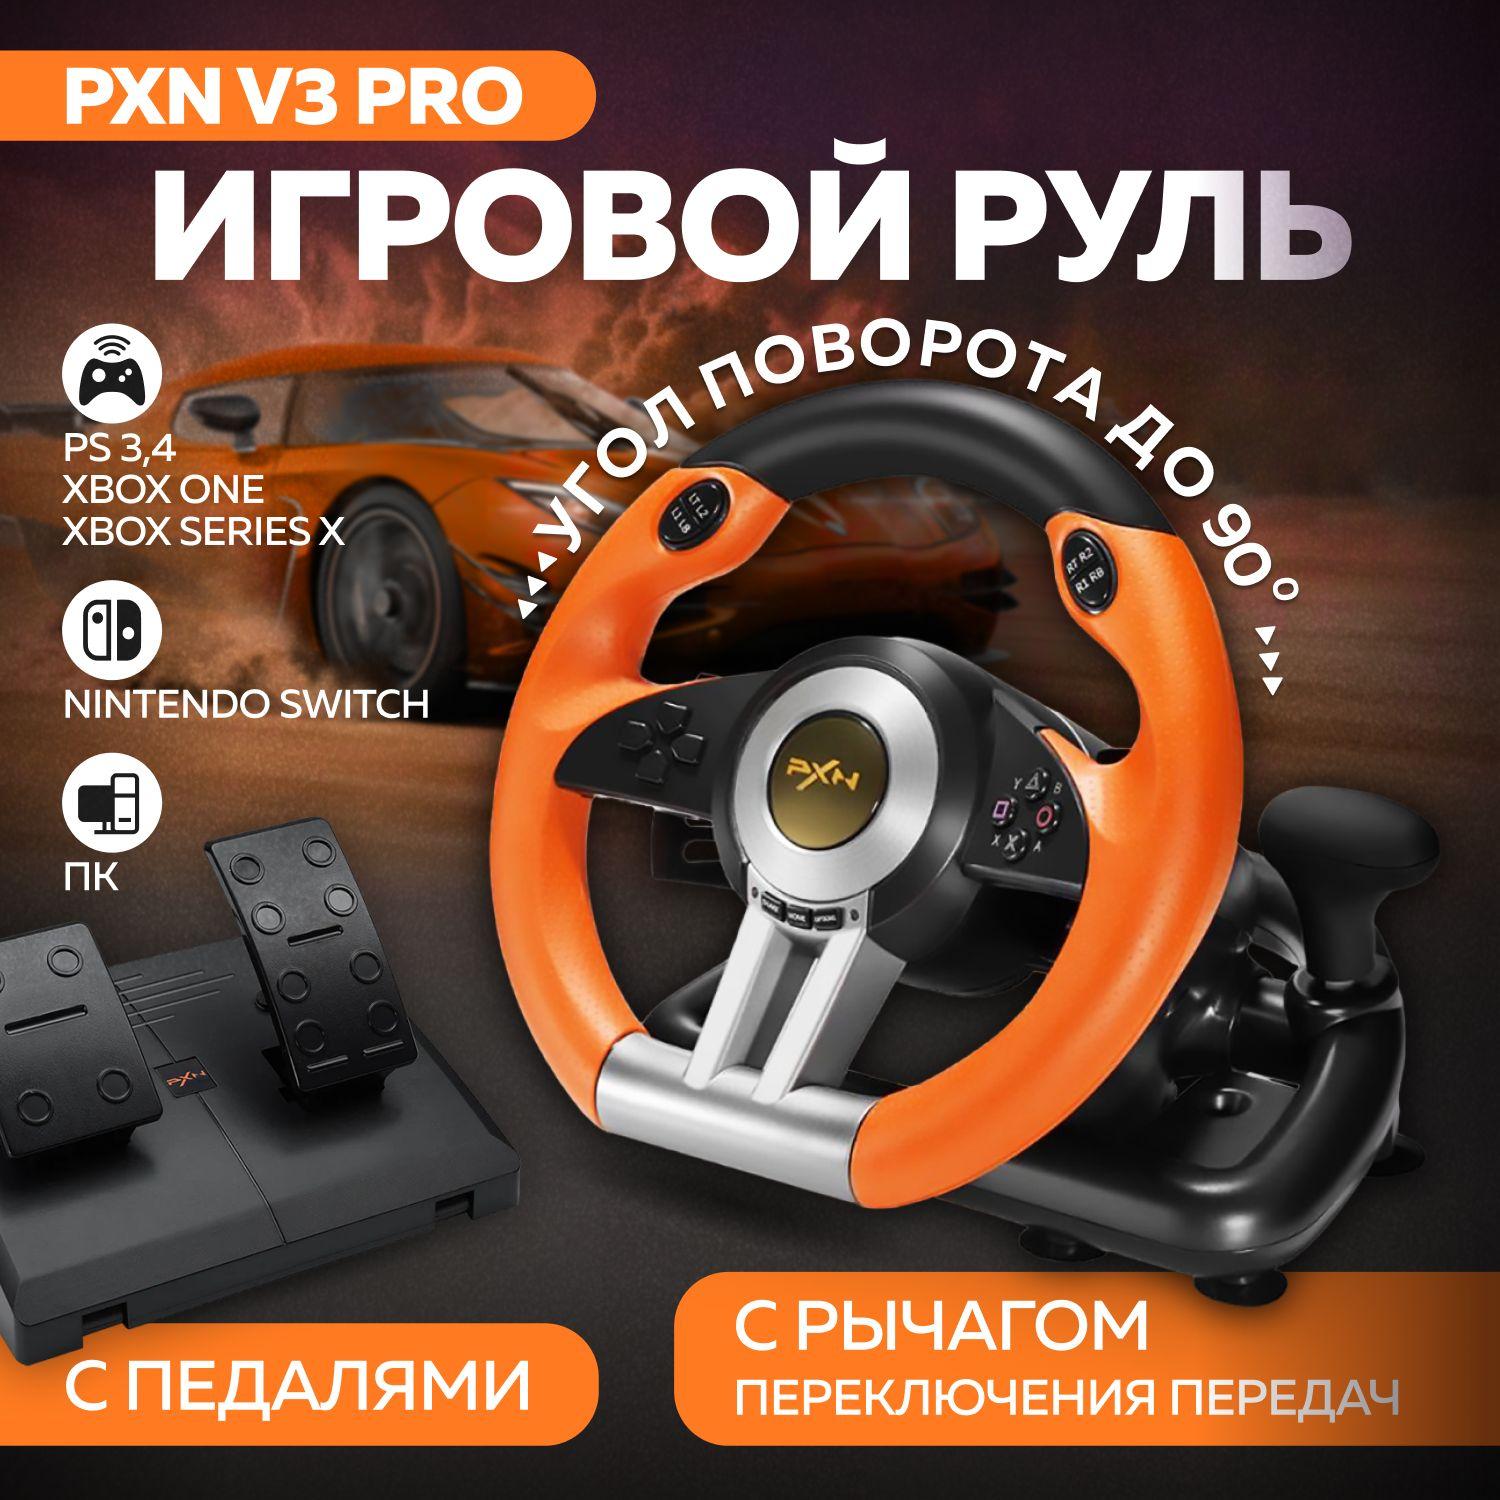 Игровой руль с педалями PXN V3 Pro для ПК, PS3-4, XBox One, Nintendo Switch